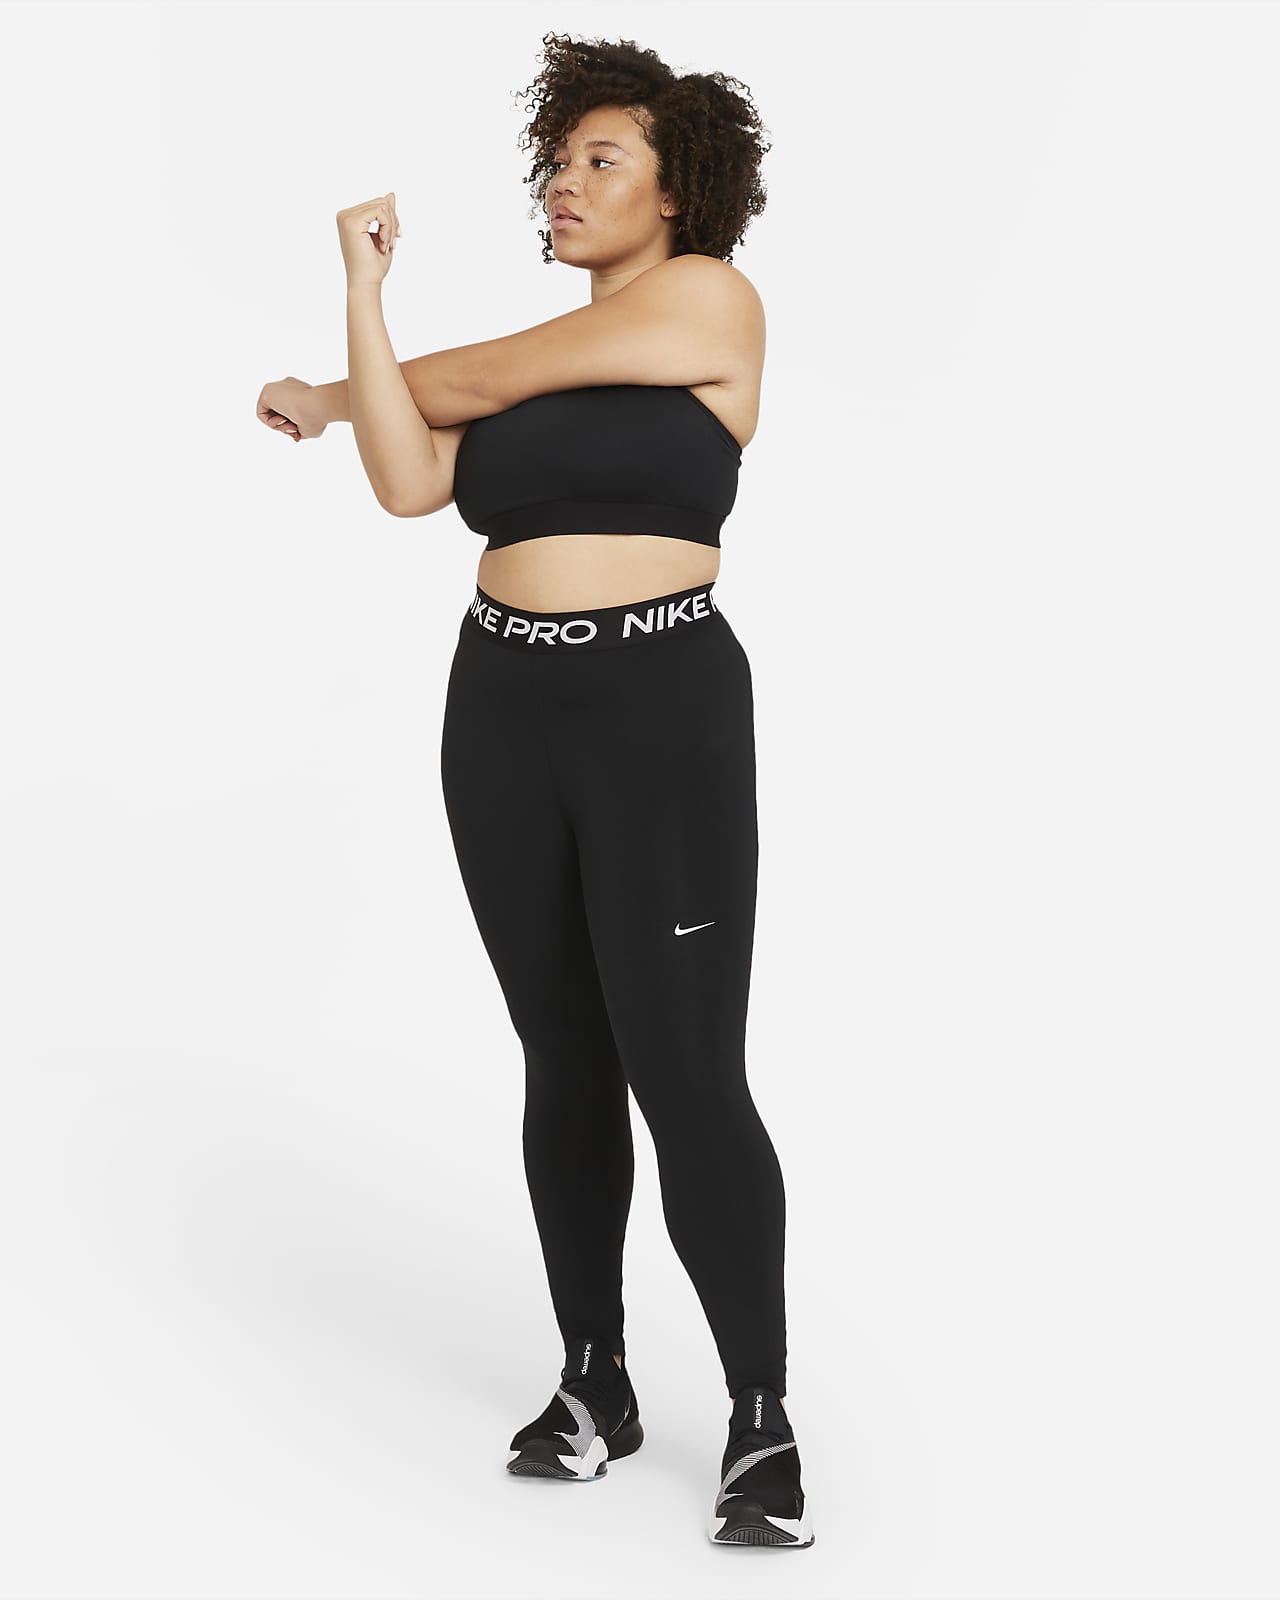 Nike Women's One 2.0 Plus Size Capri Tight Leggings | Academy